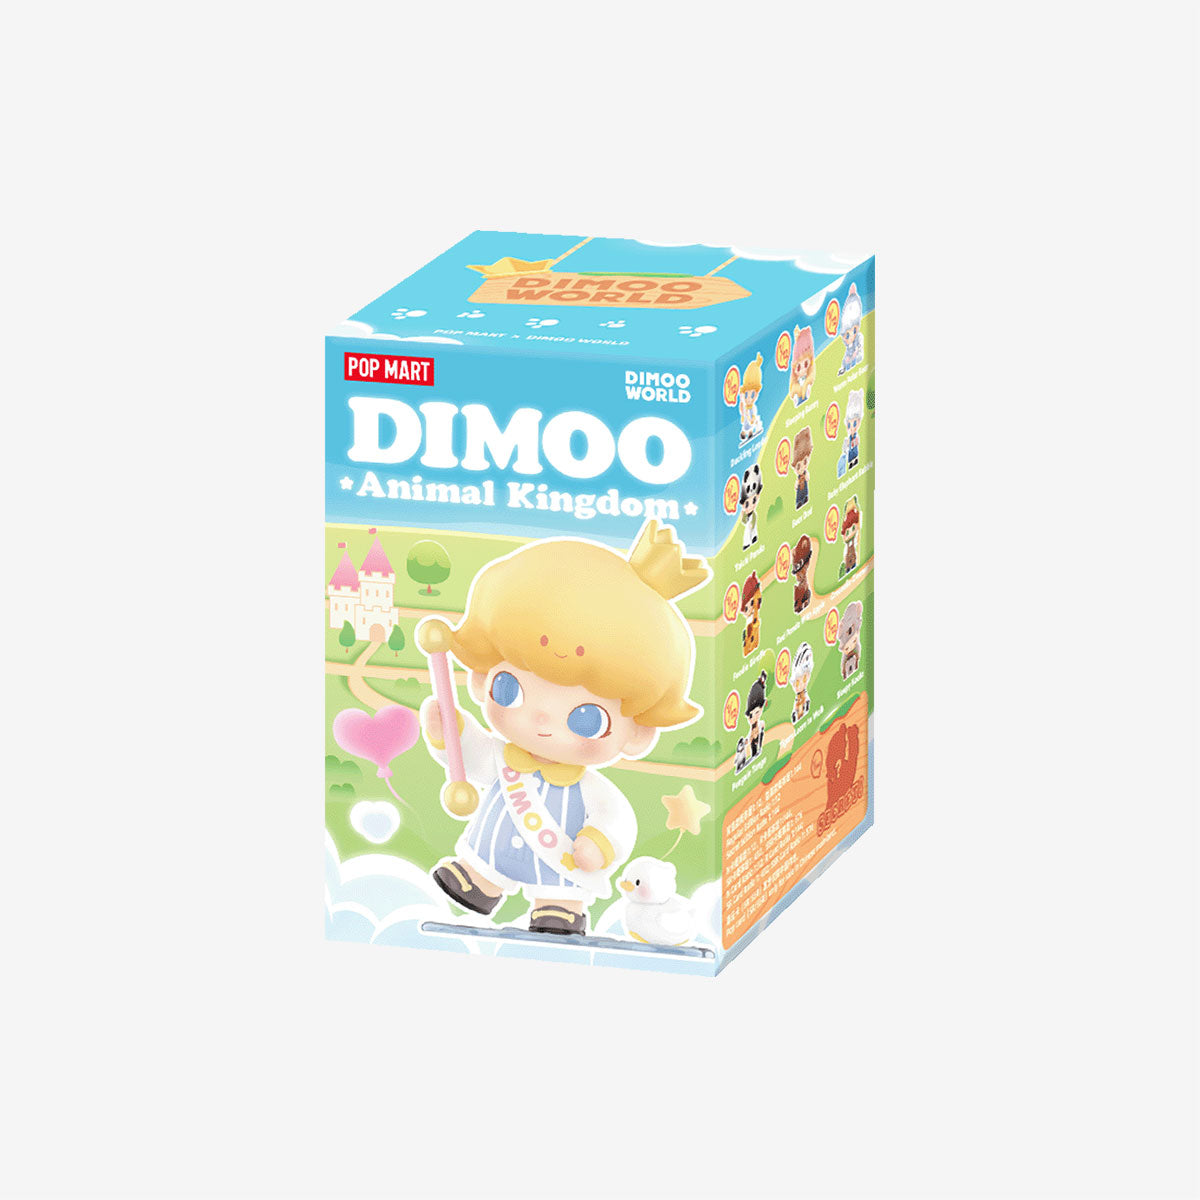 【New】Pop Mart DIMOO Animal Kingdom Series Figures Blind Box